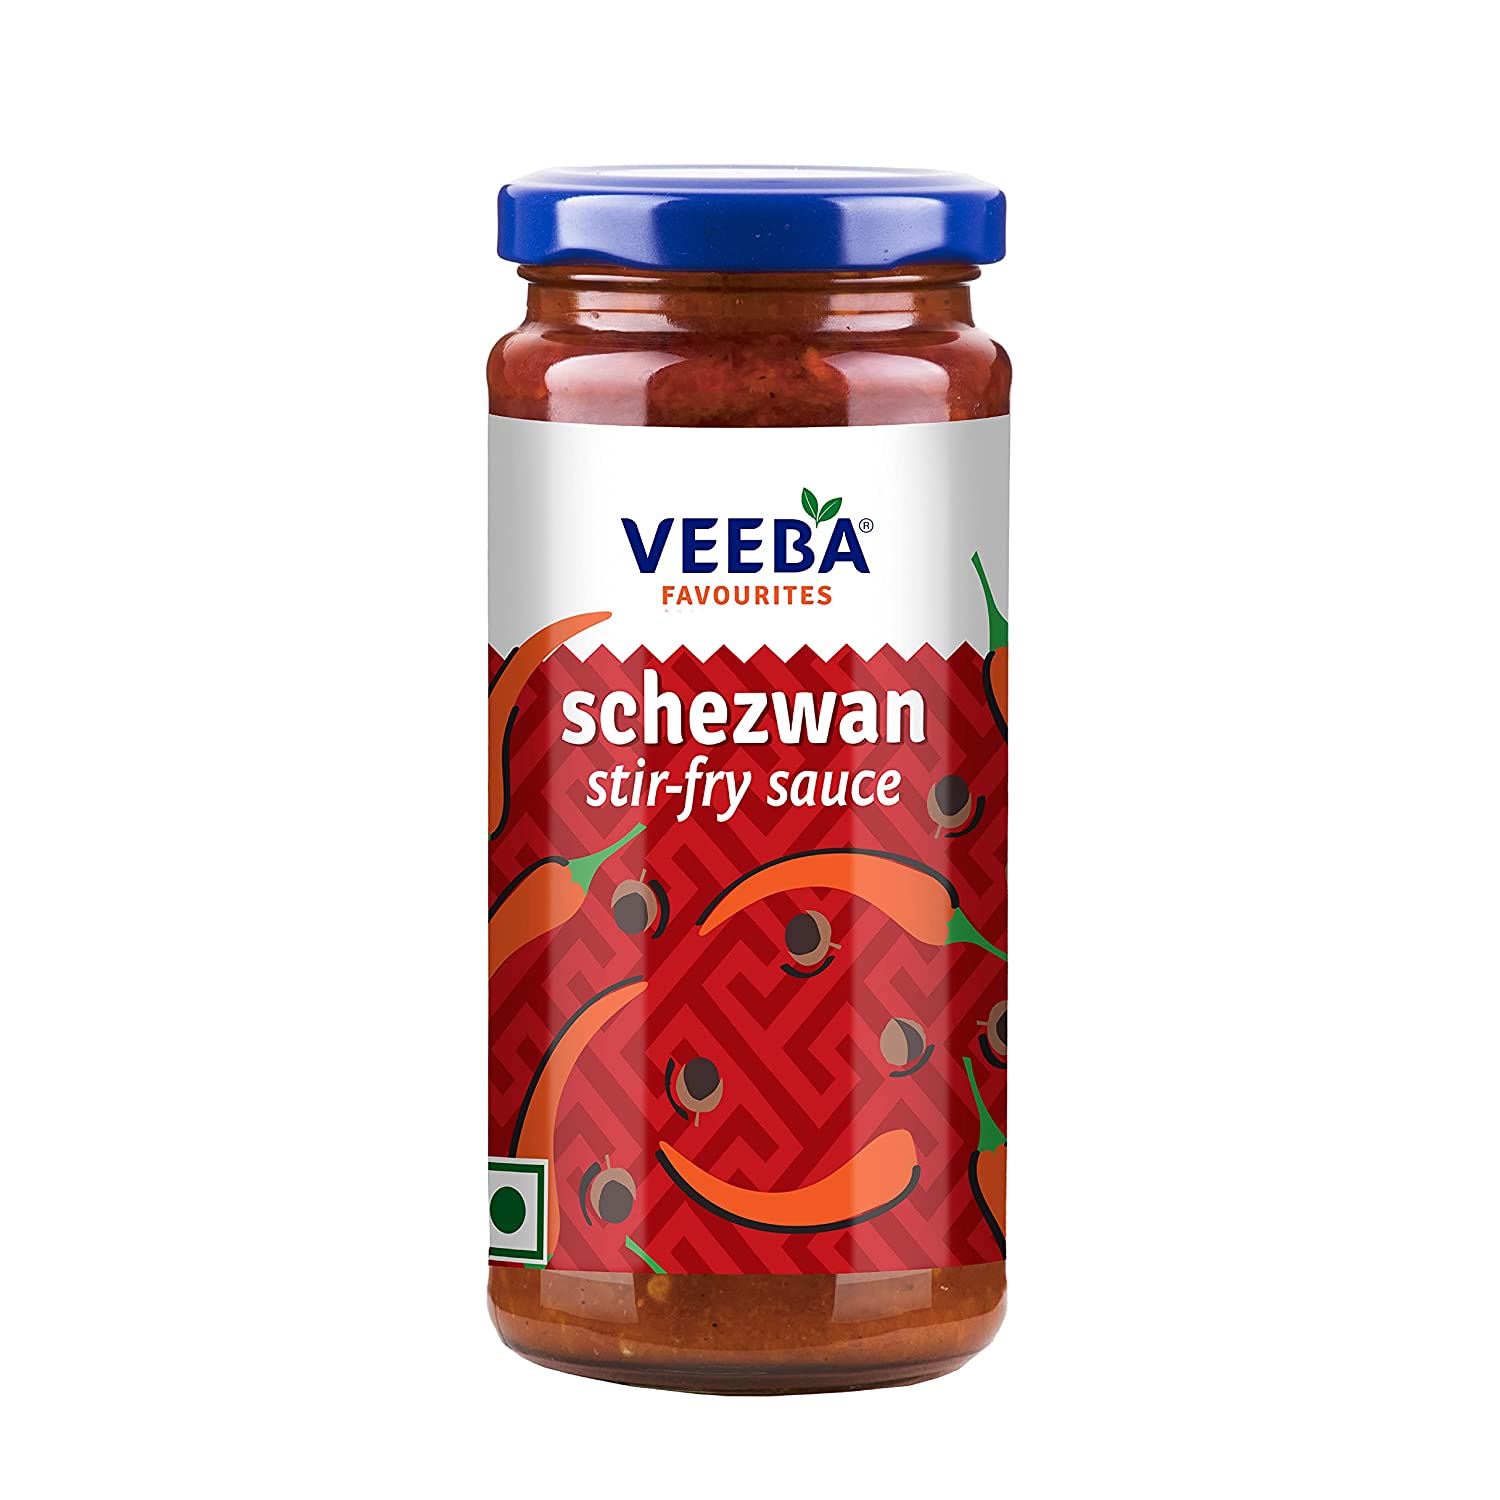 Veeba Schezwan Sauce Image